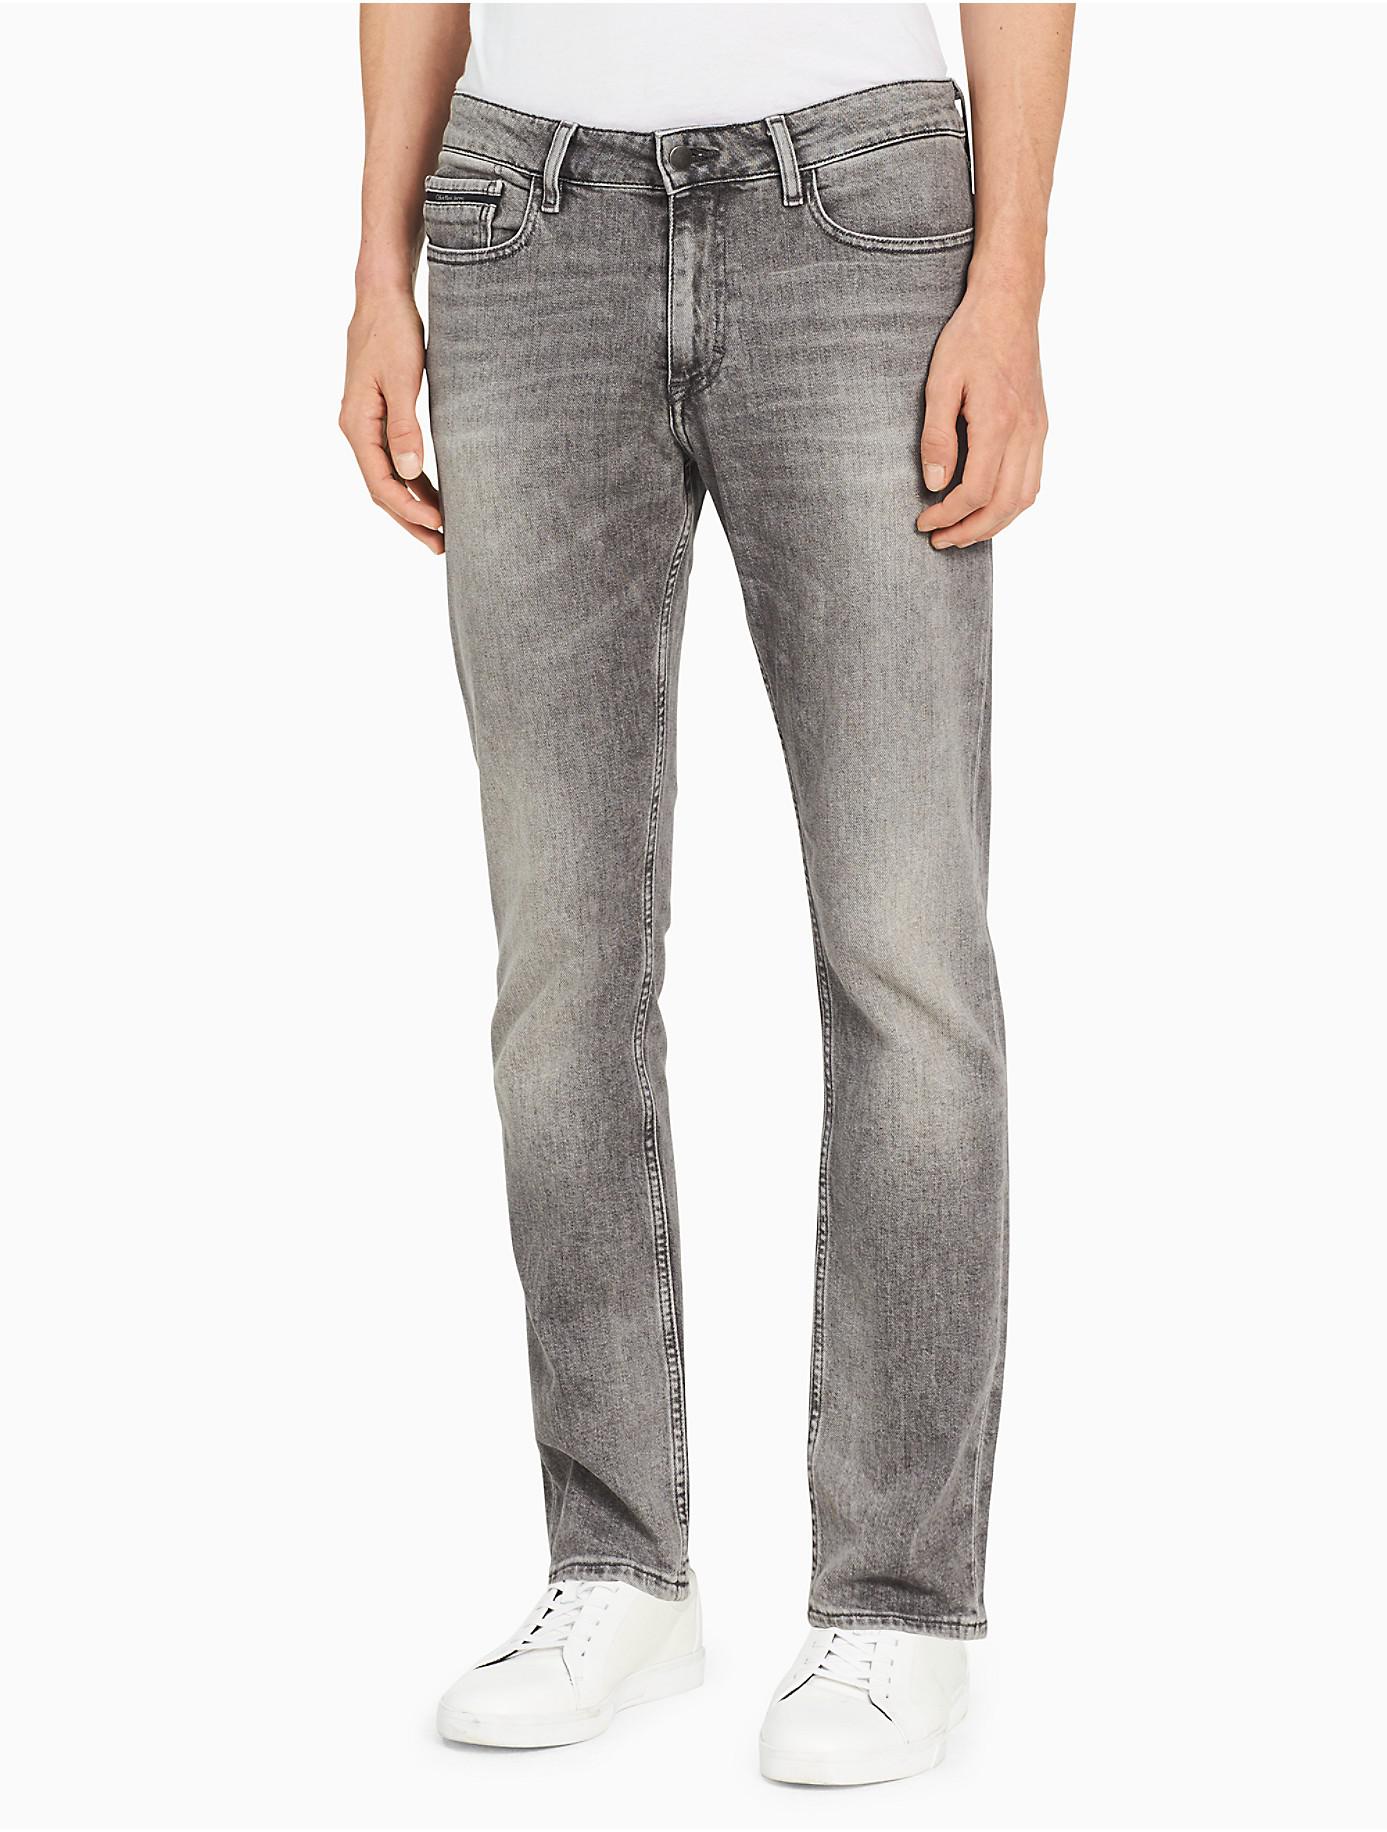 Introducir 70+ imagen calvin klein grey jeans mens